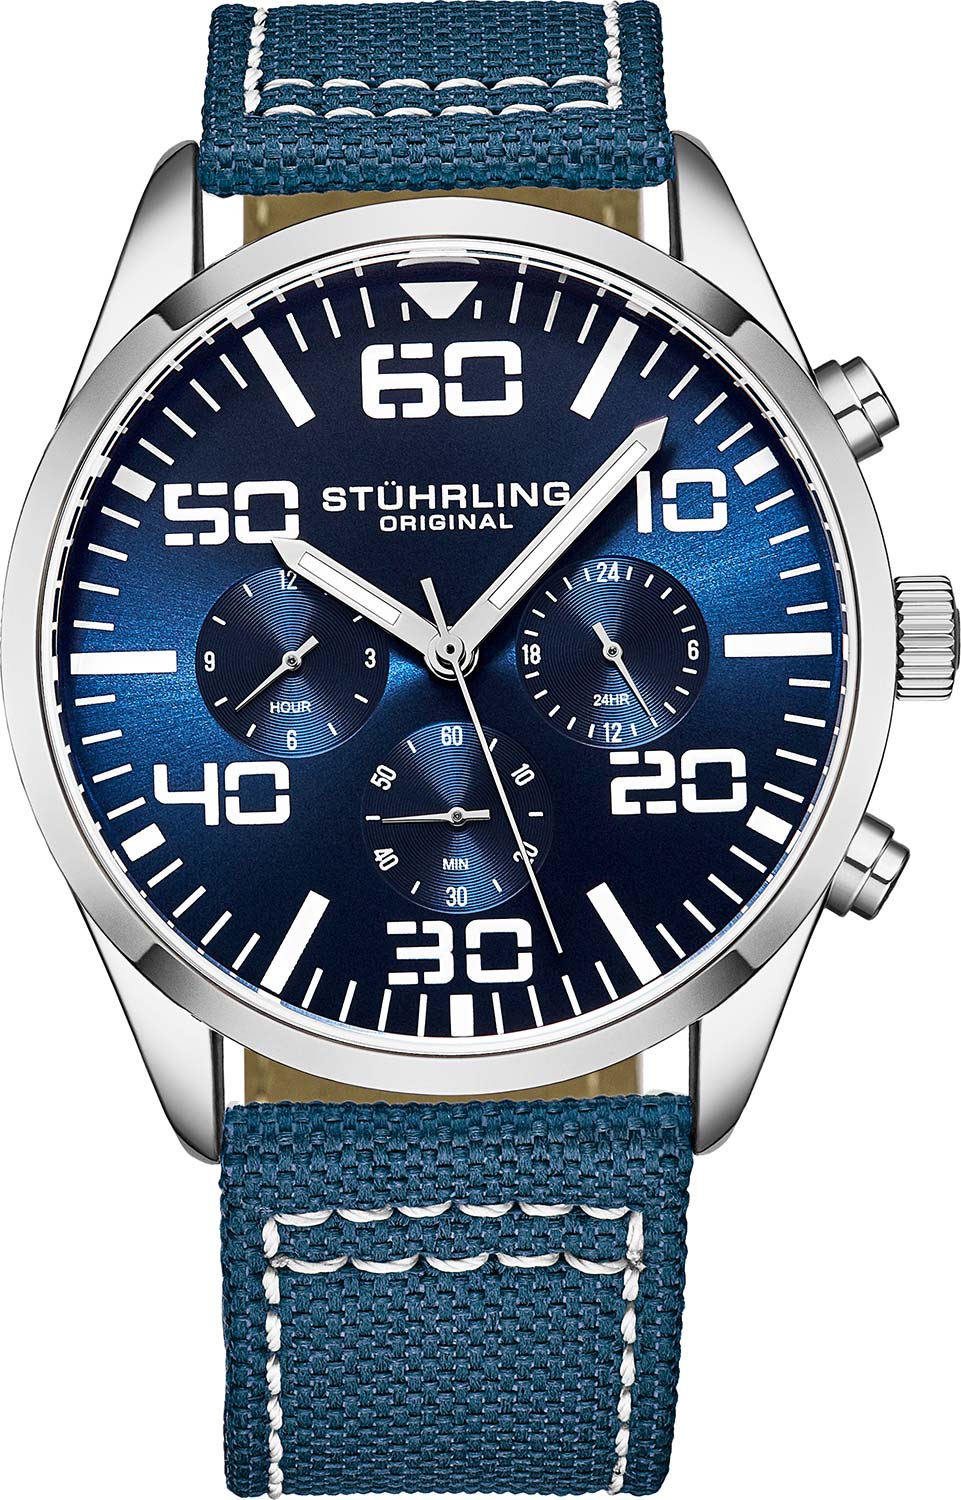 Наручные часы Stuhrling 4001.4 с хронографом